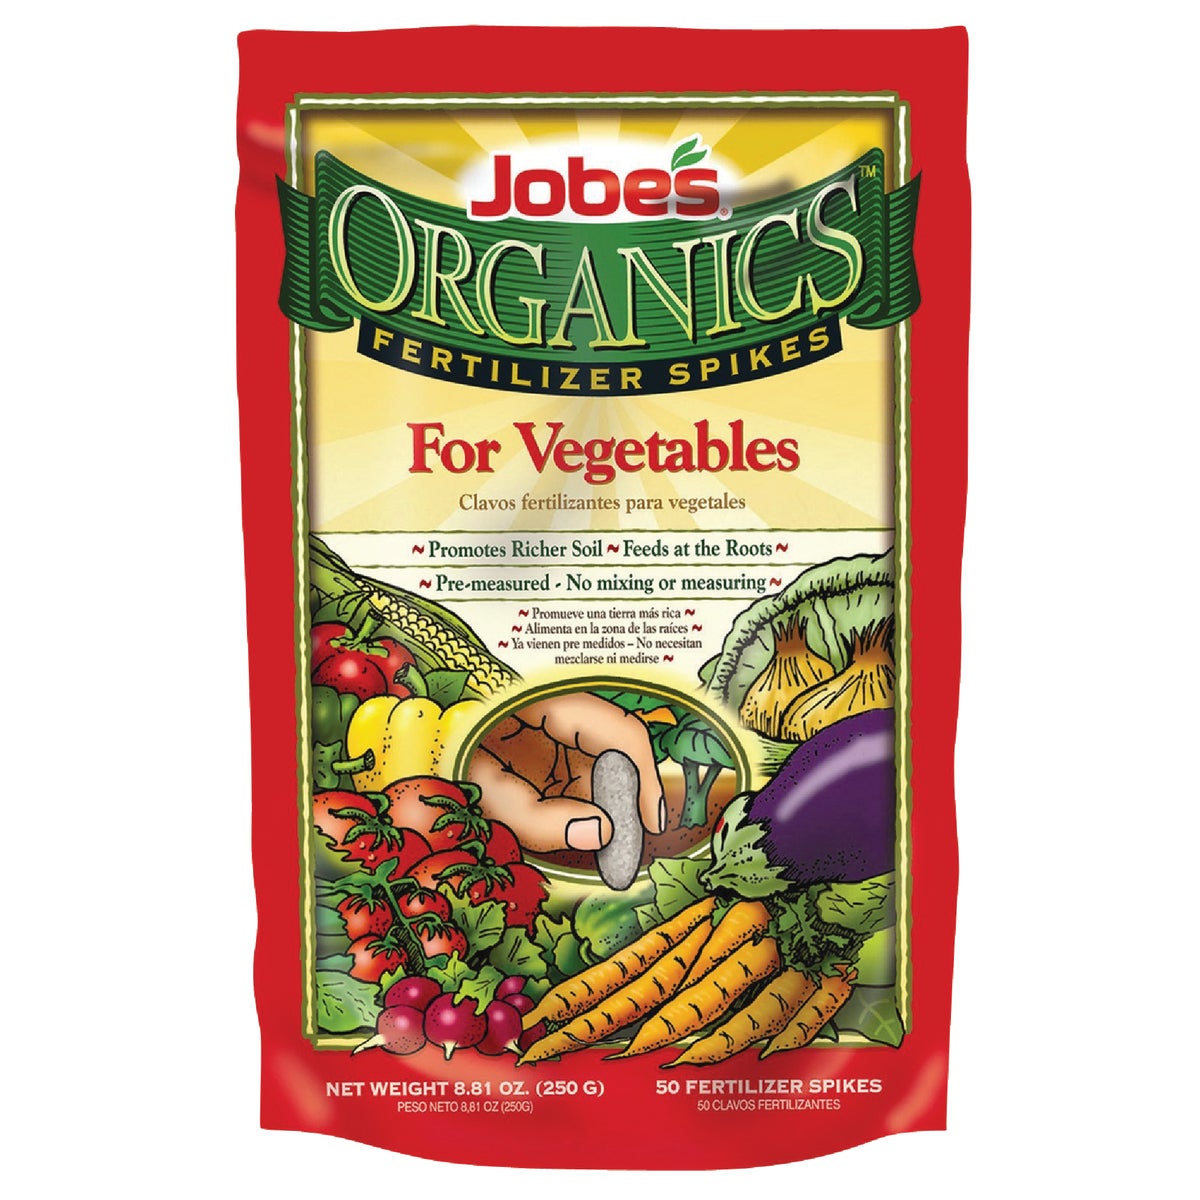 Jobe’s Organic Vegetable Fertilizer Spikes